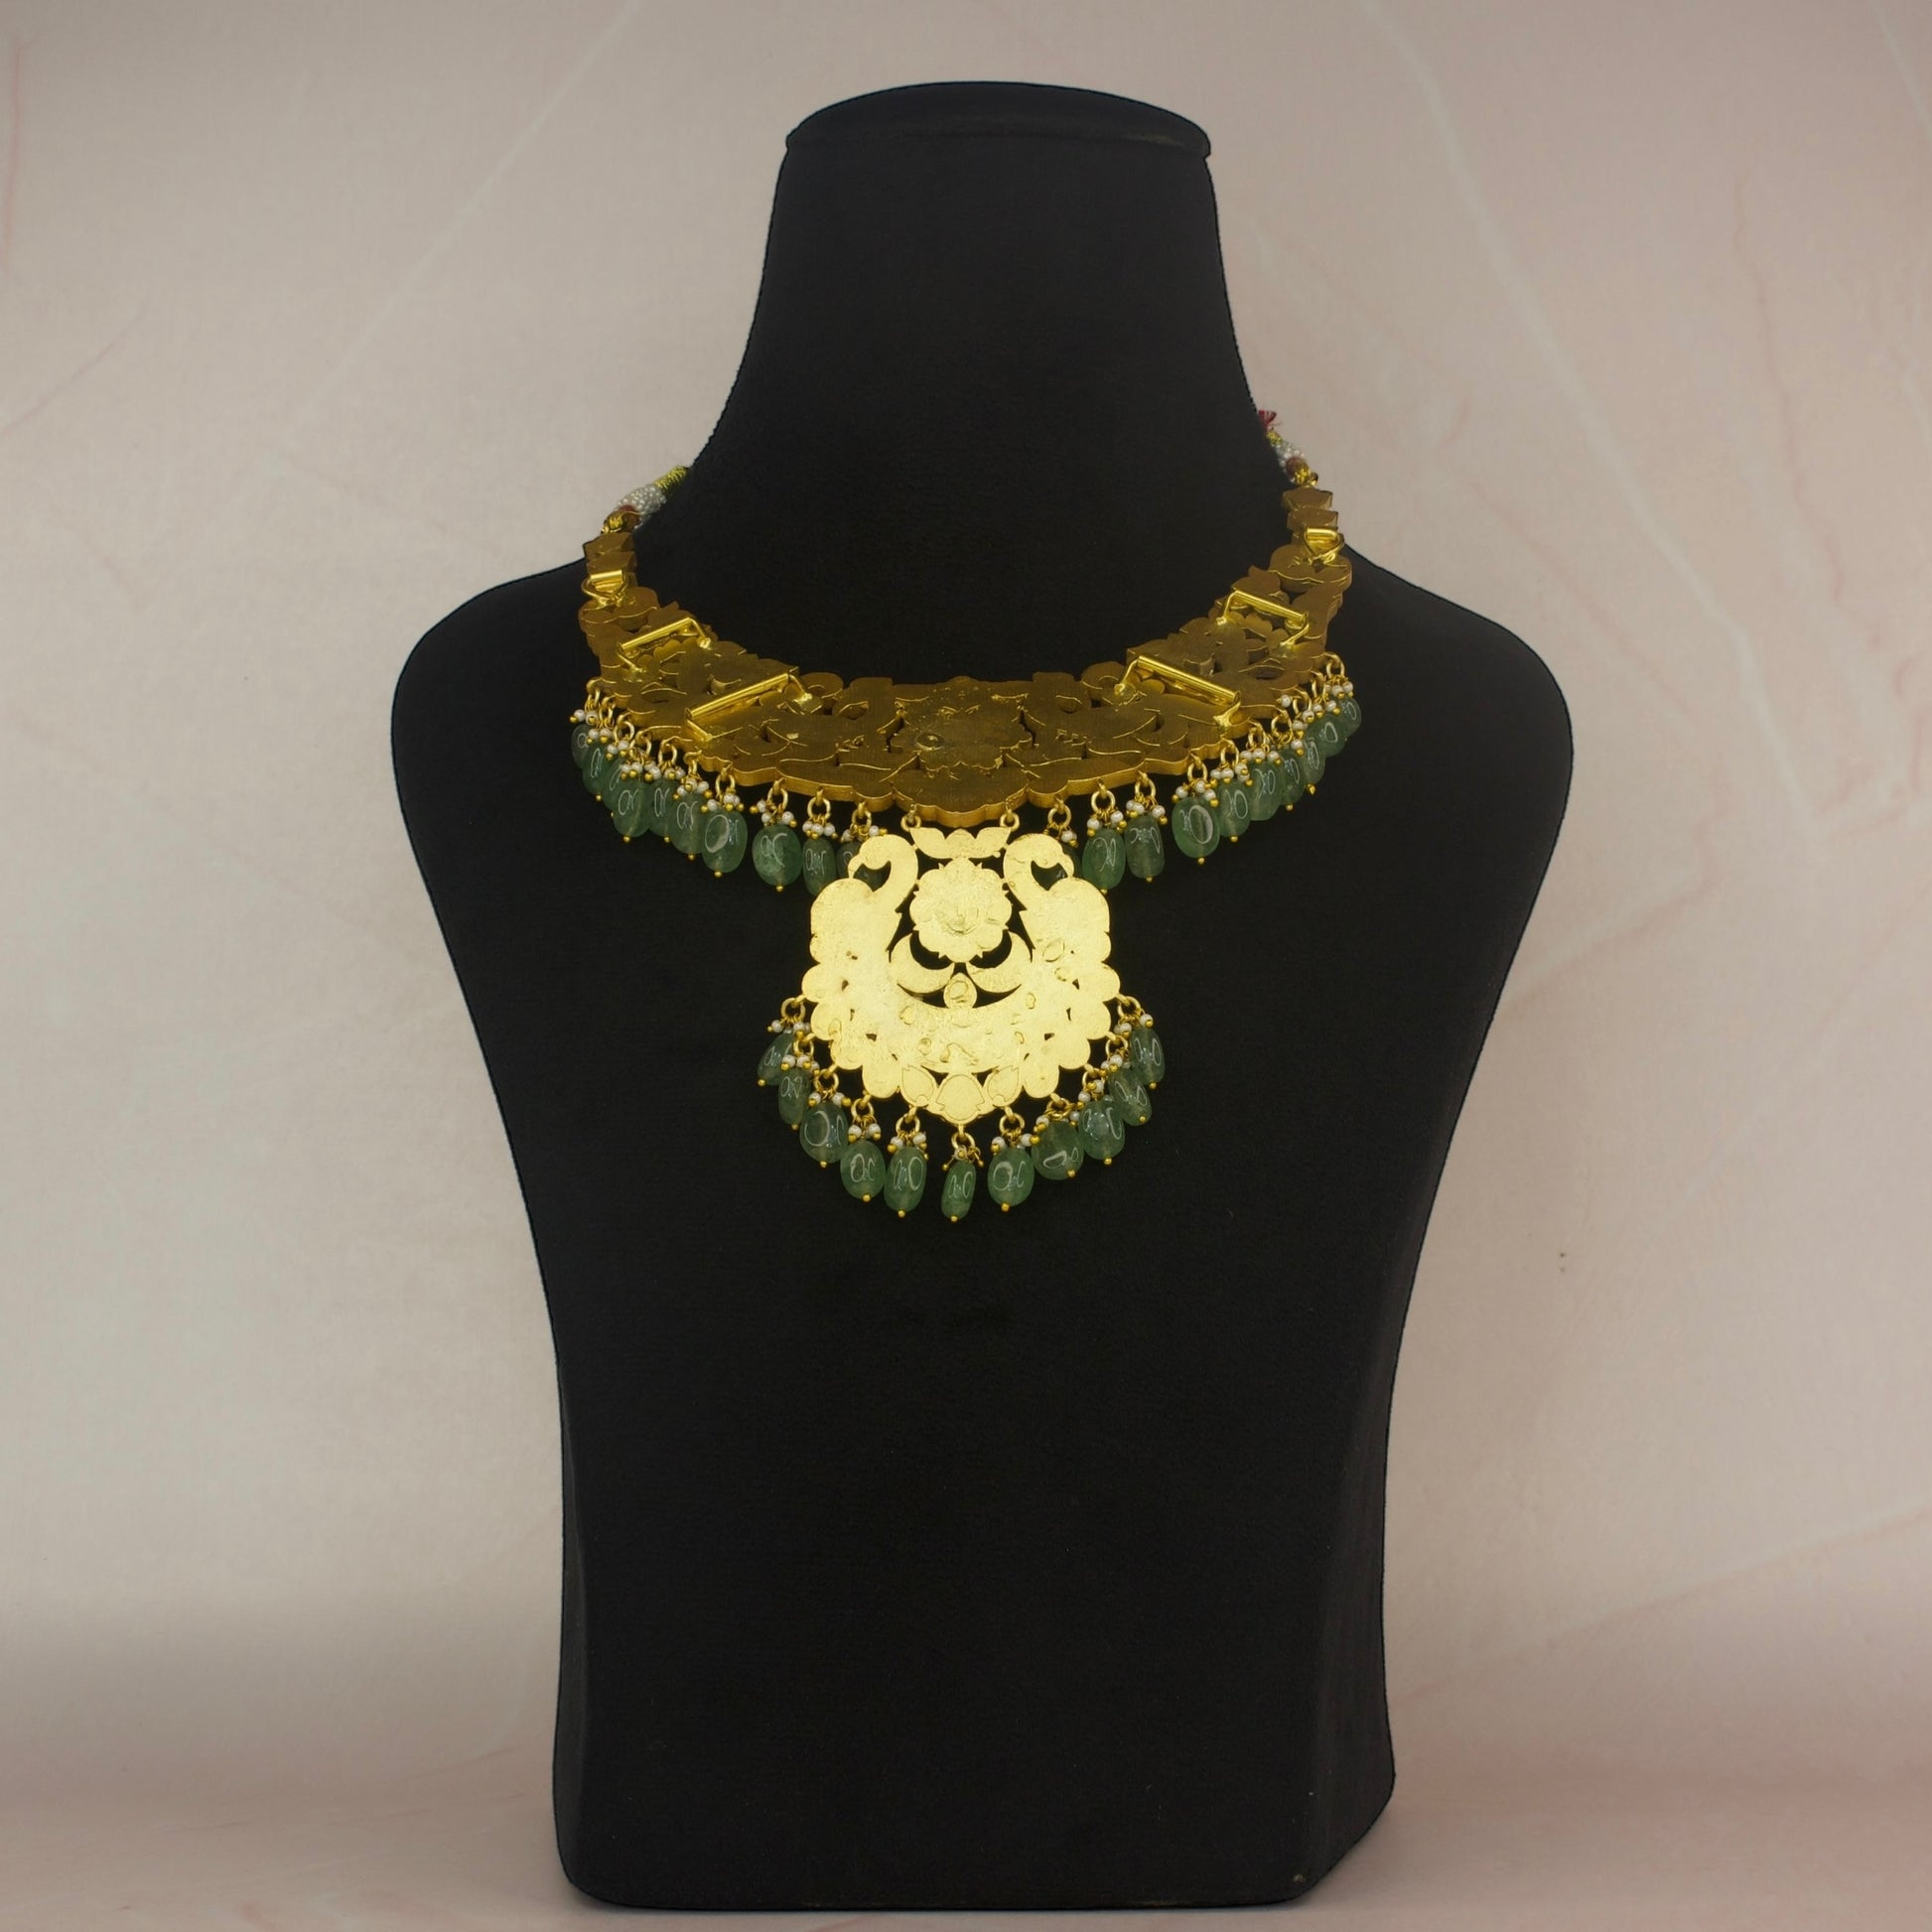 Beaded Jadau Kundan Short Necklace with Gold Plating with 22k Gold Plating. THis product belongs to Jadau kundan jewellery Category